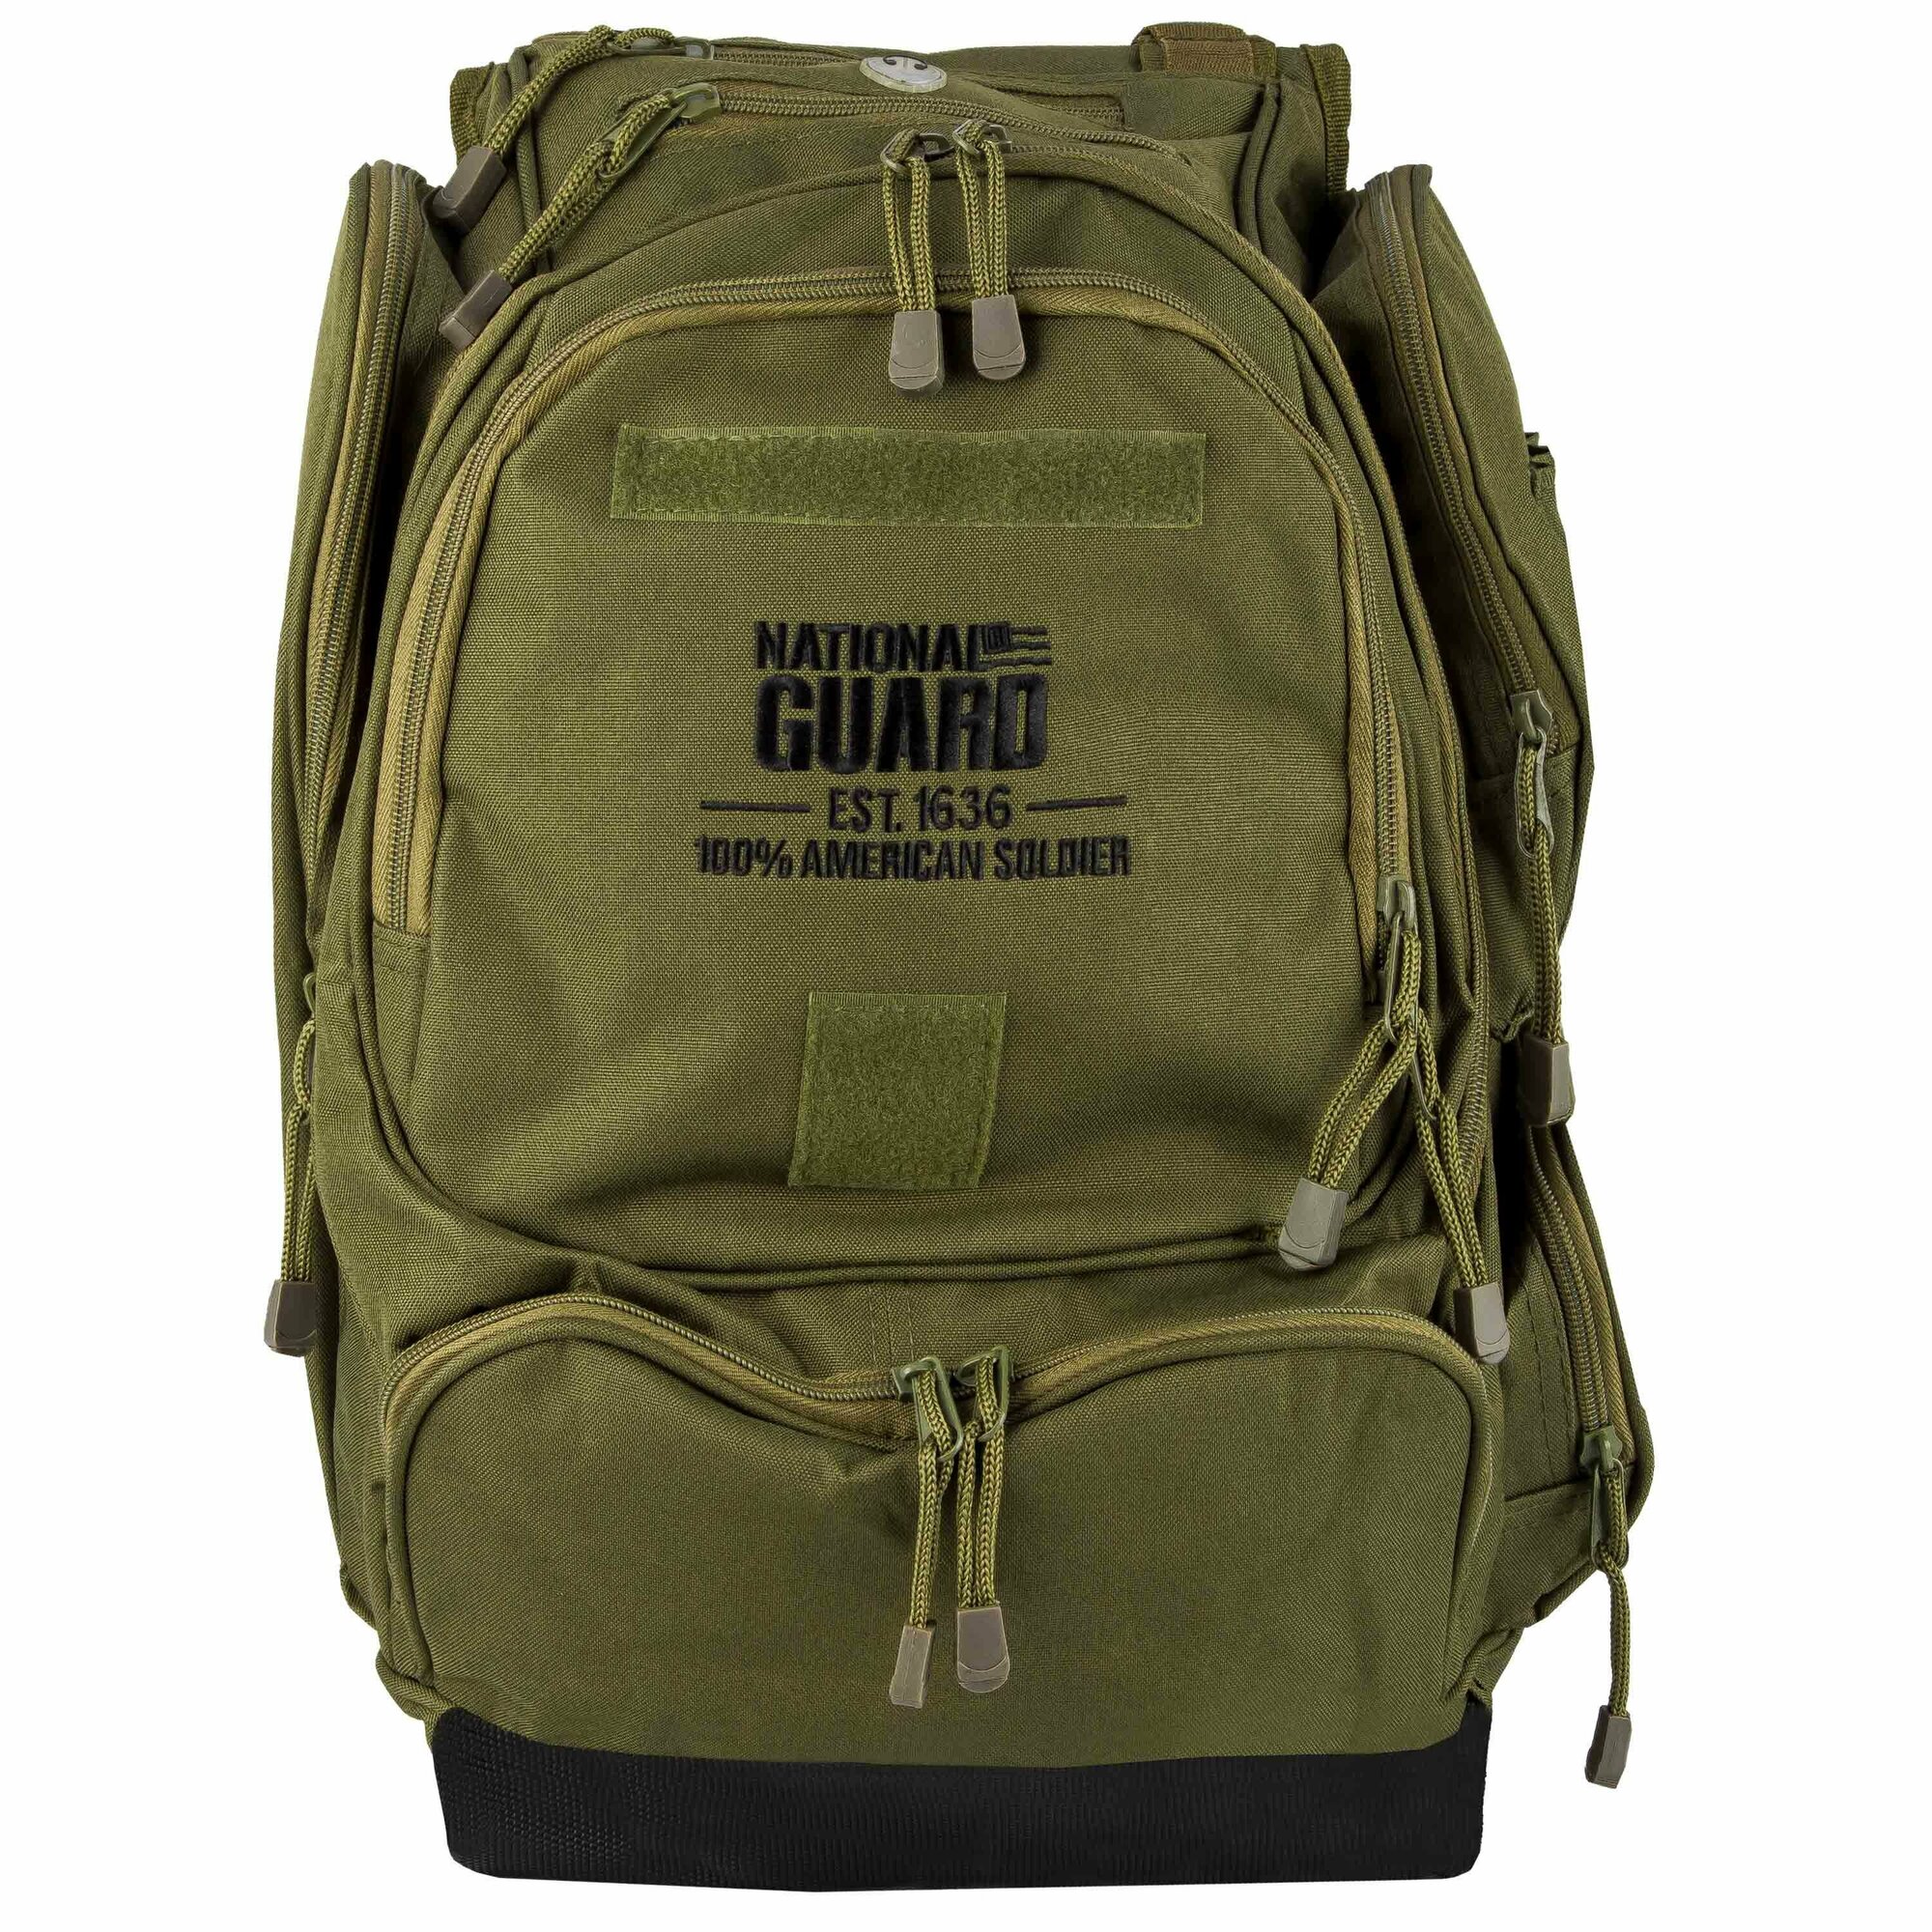 U.S. Backpack National Guard olive